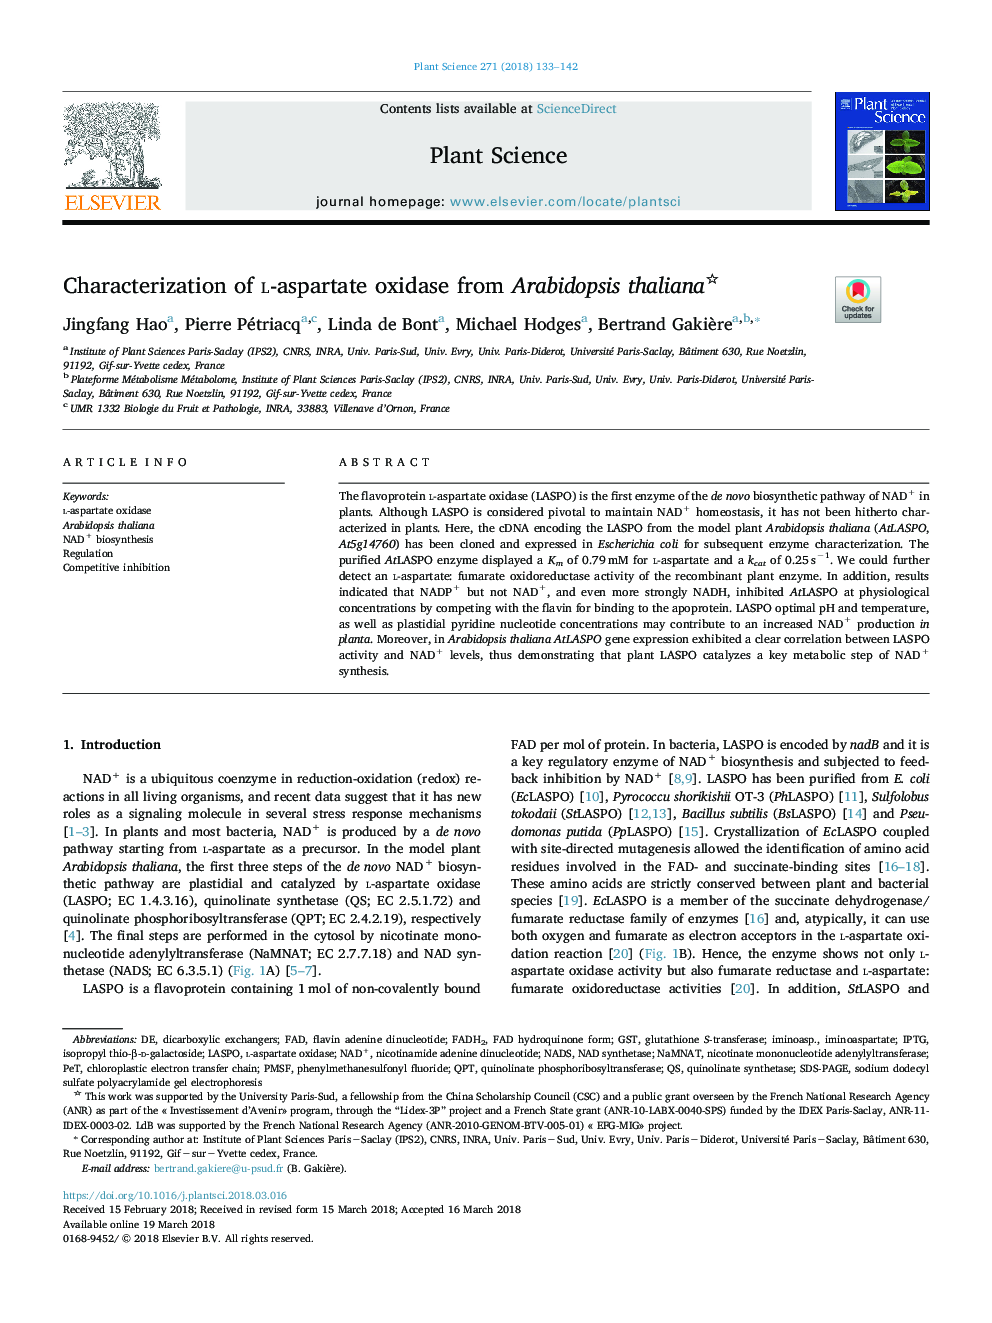 Characterization of l-aspartate oxidase from Arabidopsis thaliana